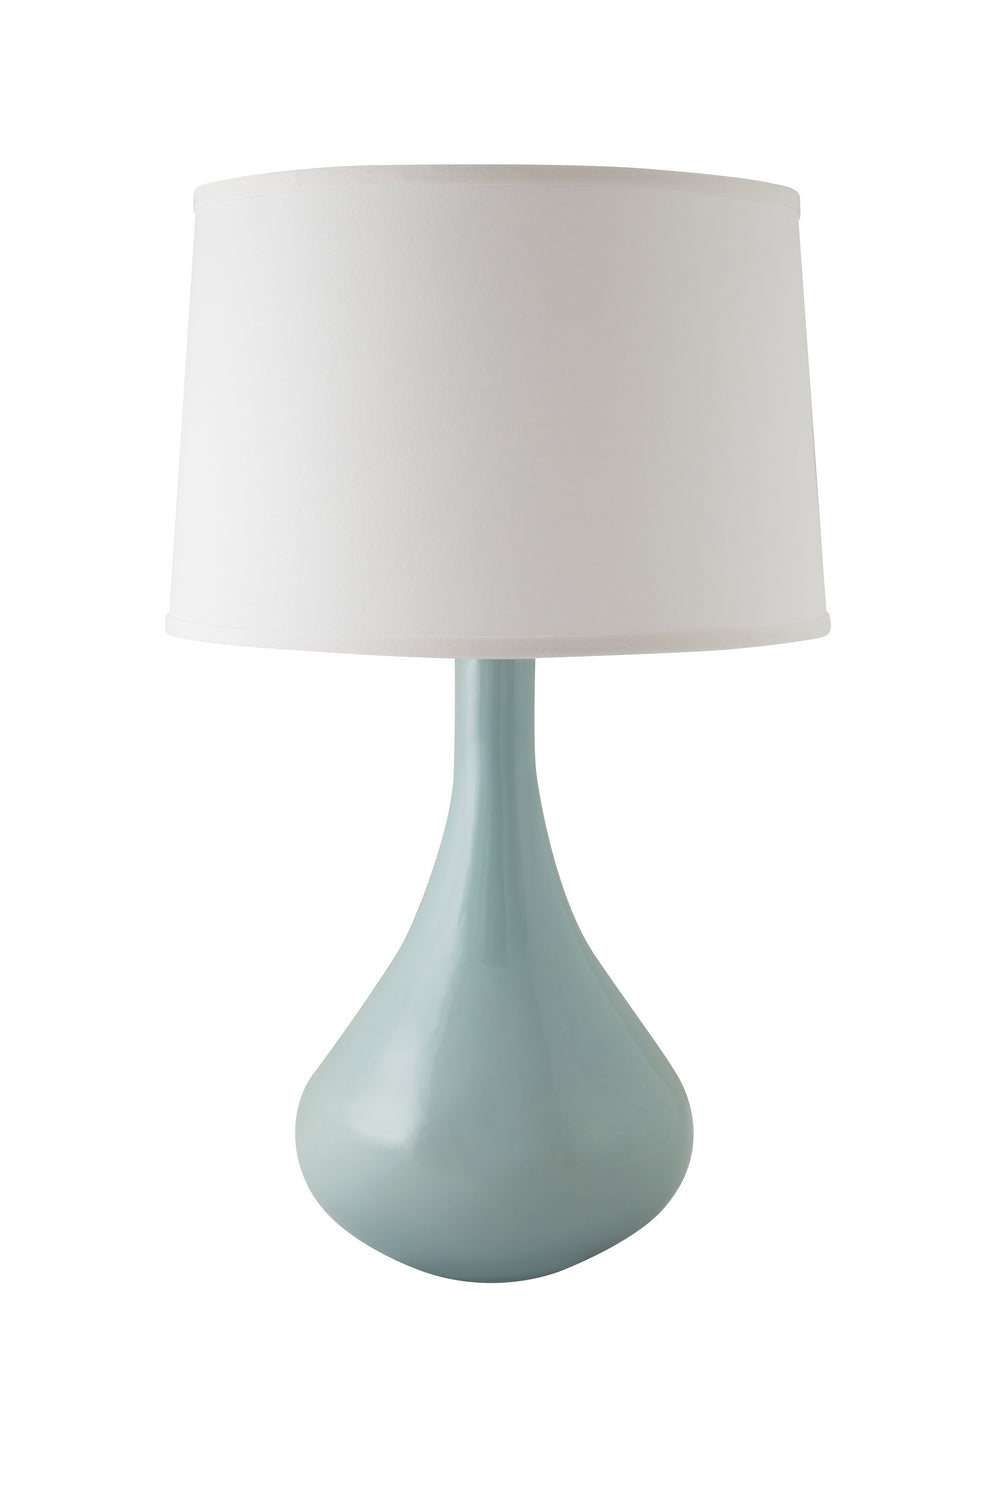 River Ceramic Lighting 174-20 Genie One Light Table Lamp Lamp Bronze / Dark